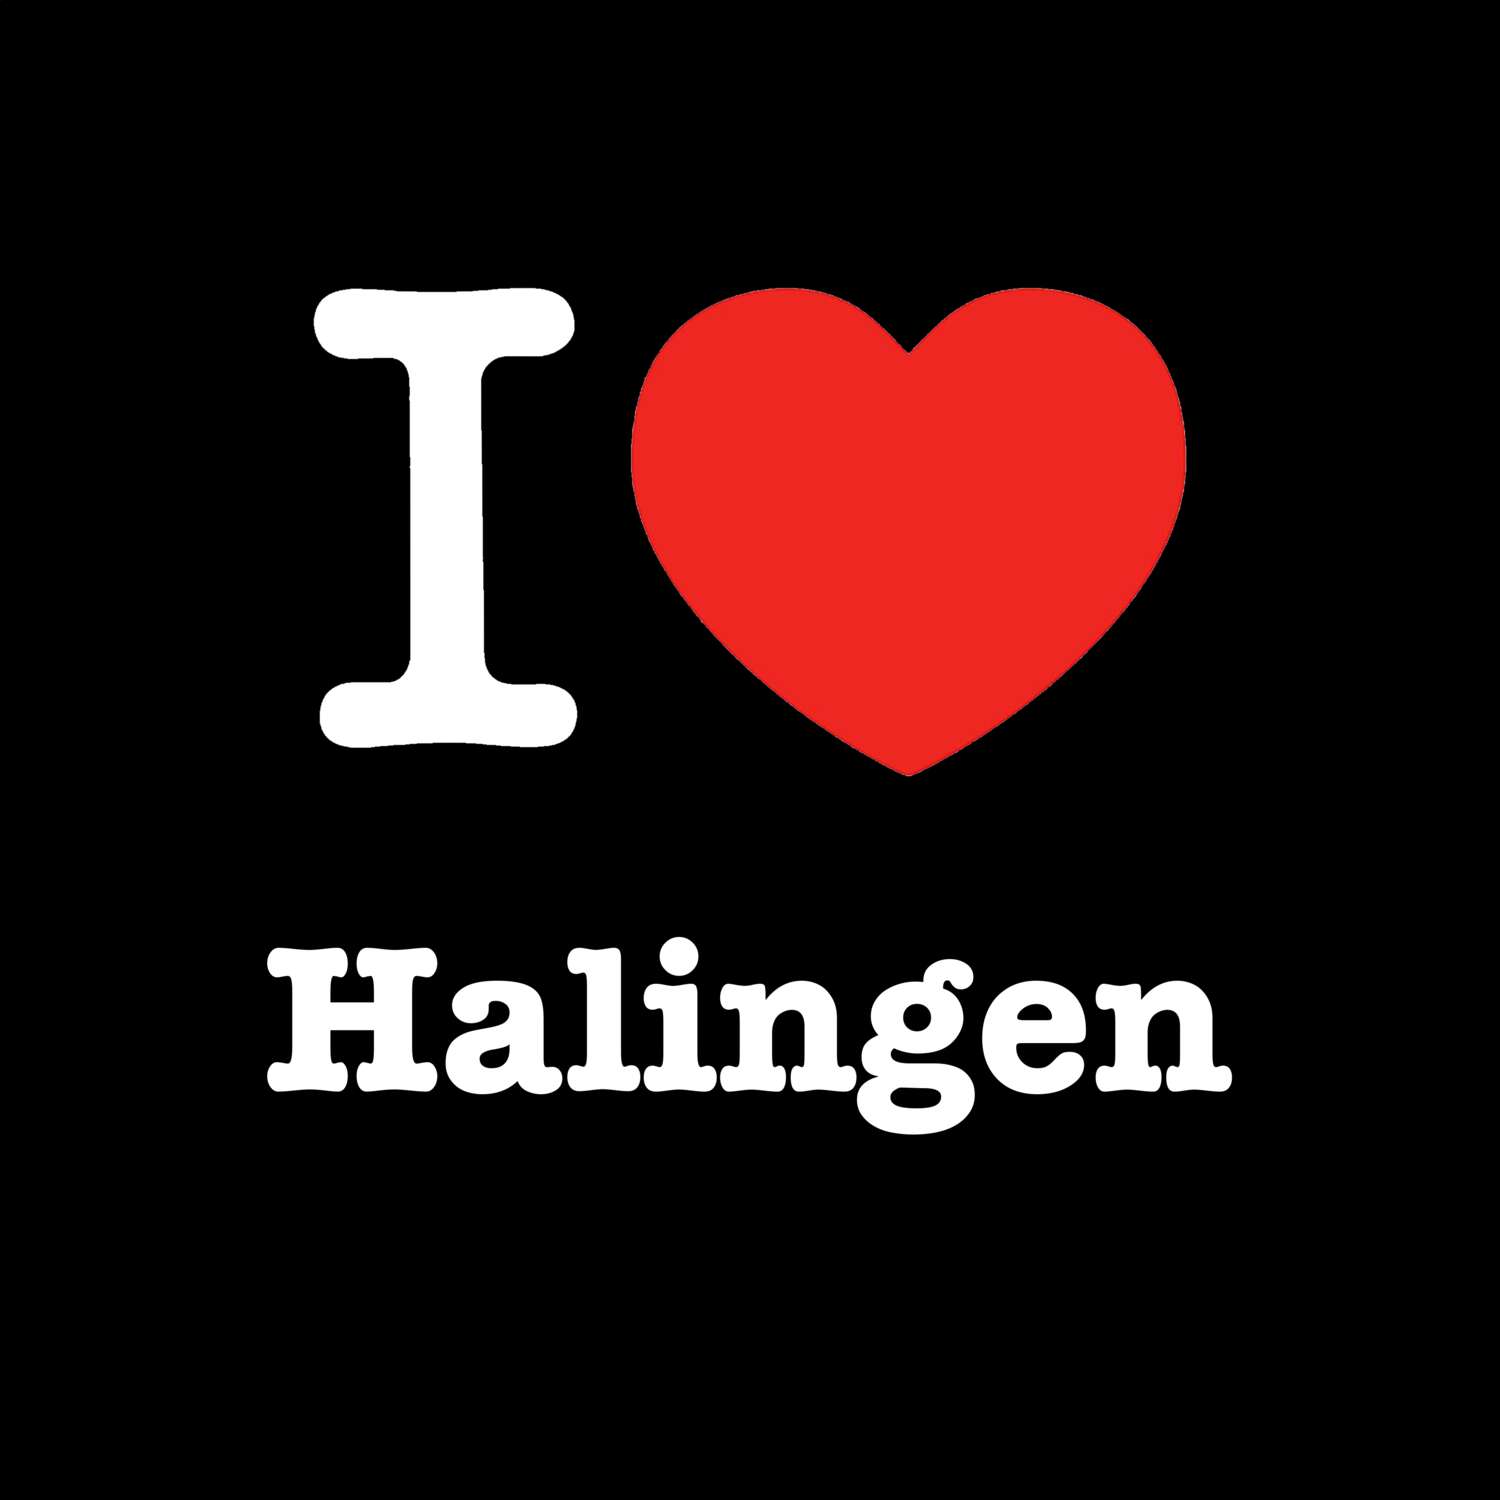 Halingen T-Shirt »I love«